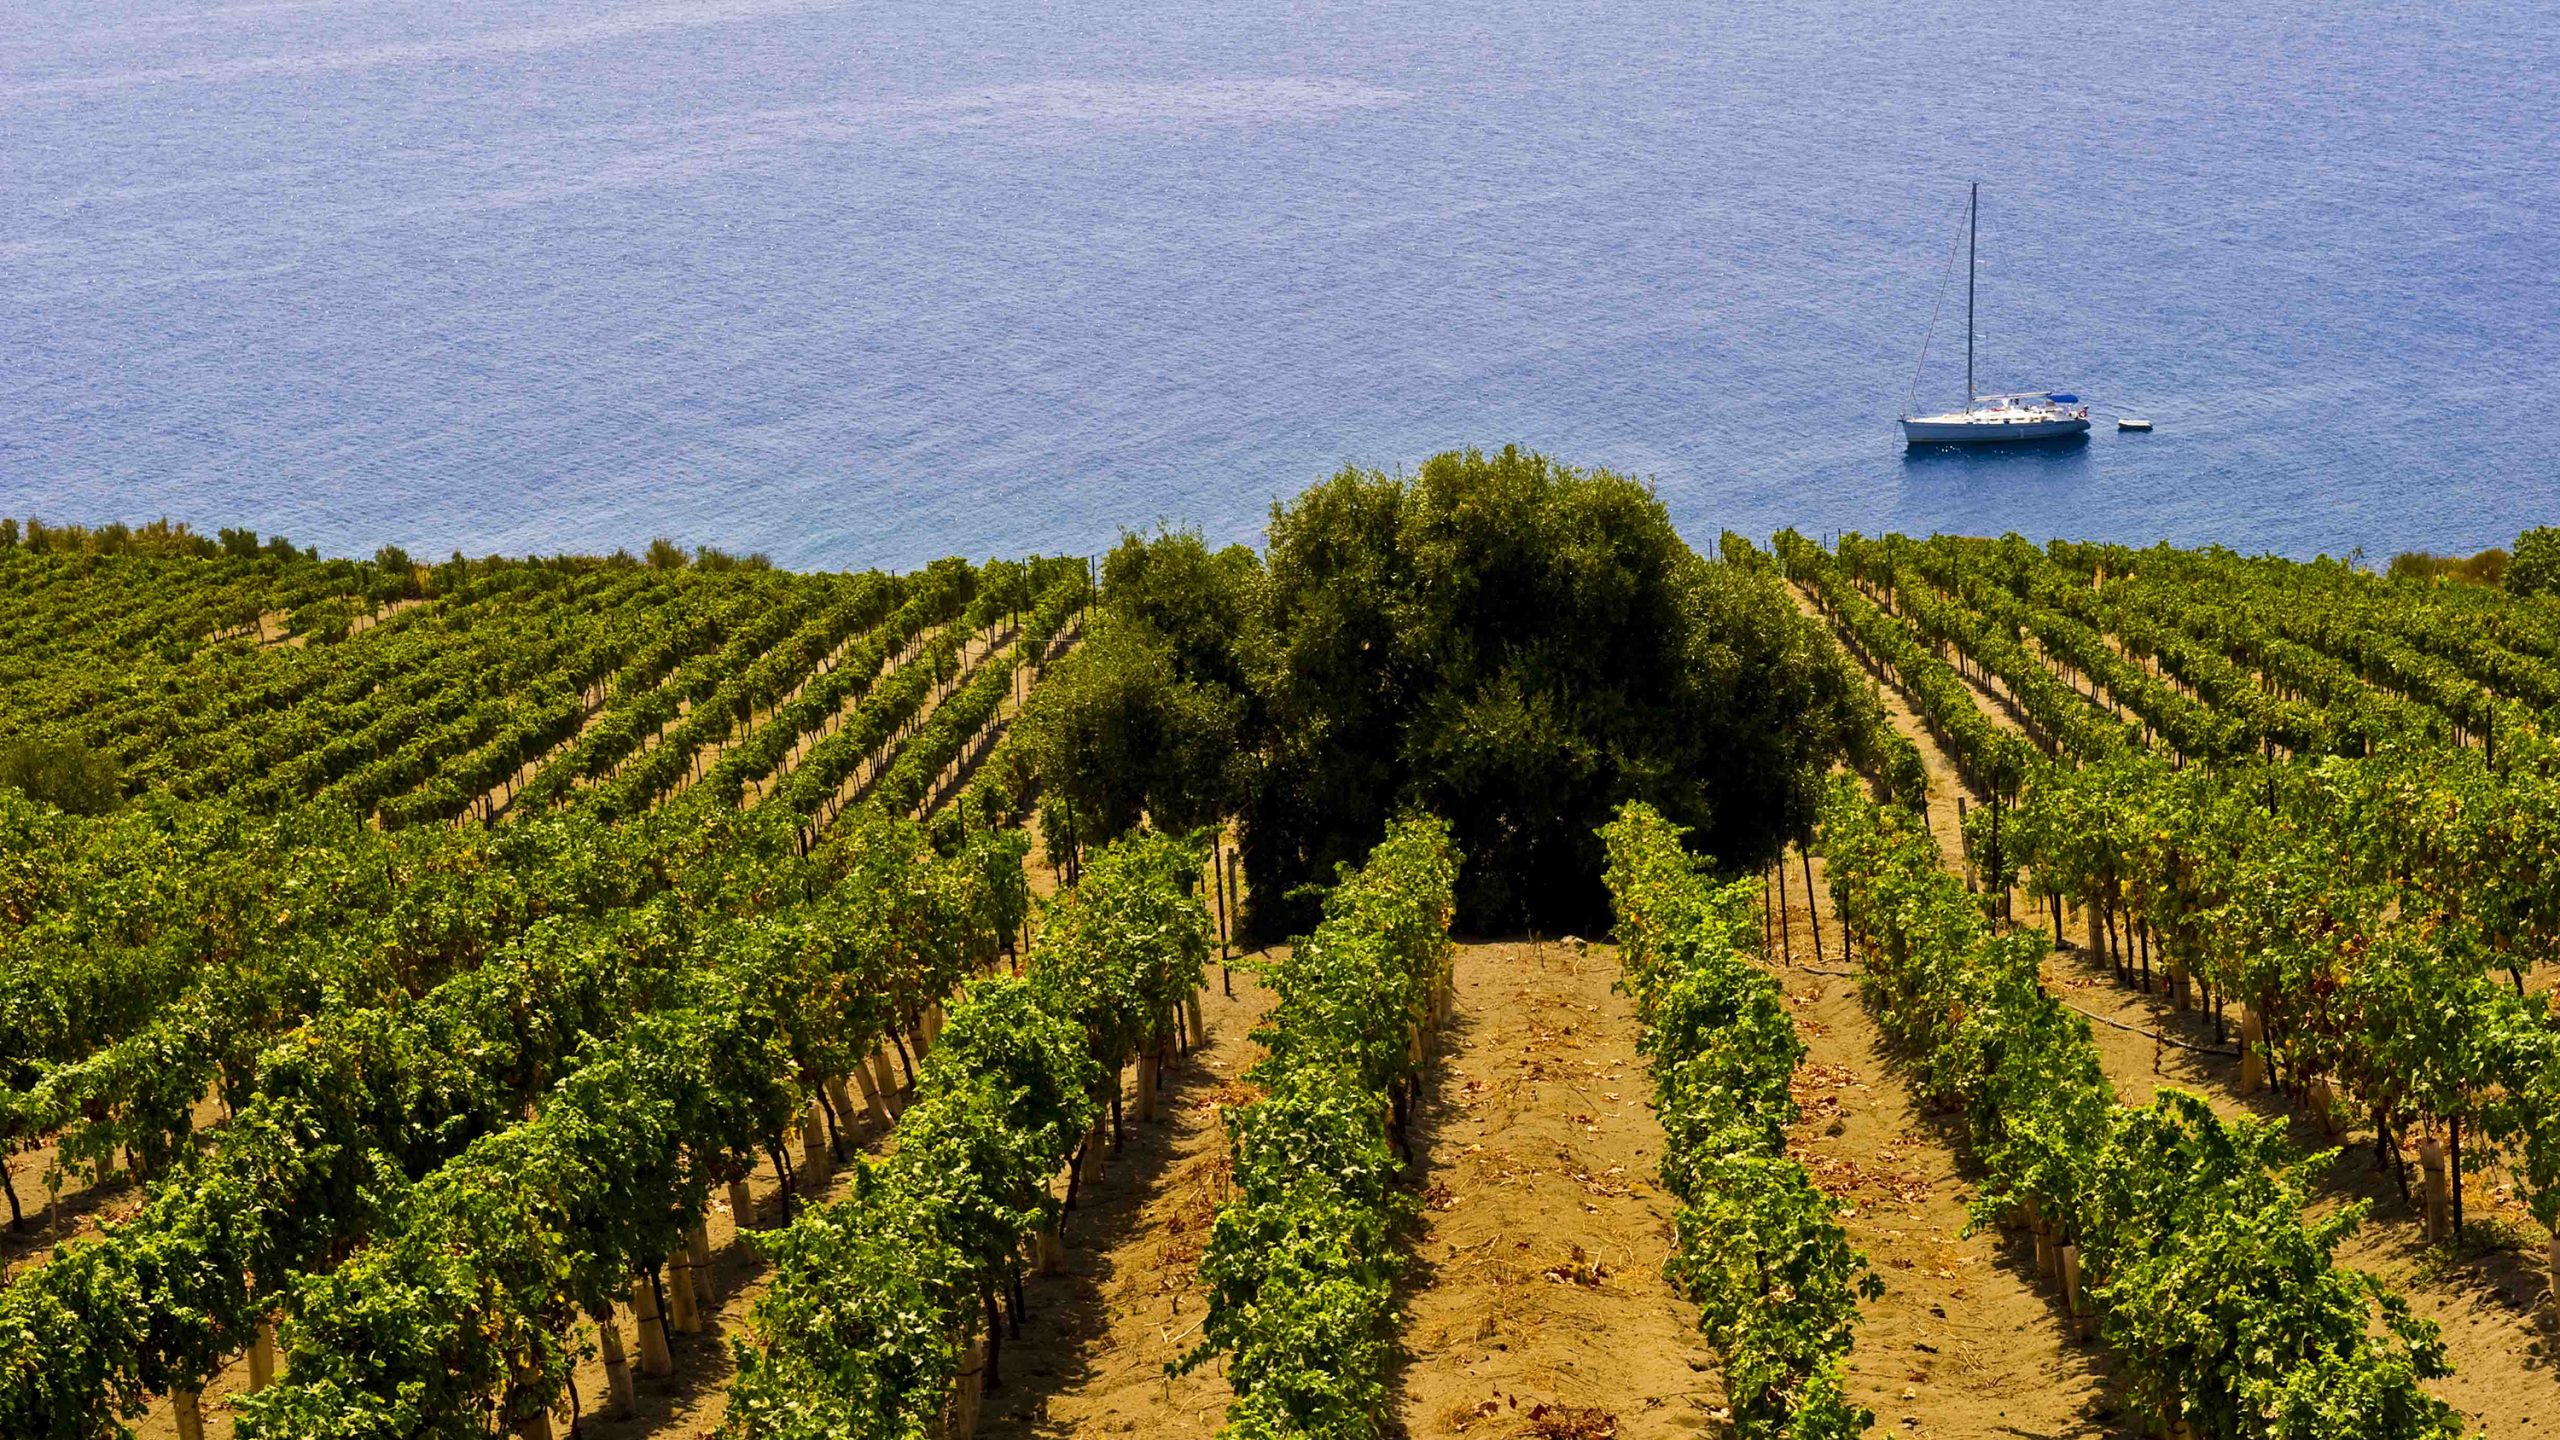 Wines of Sicily Colangelo